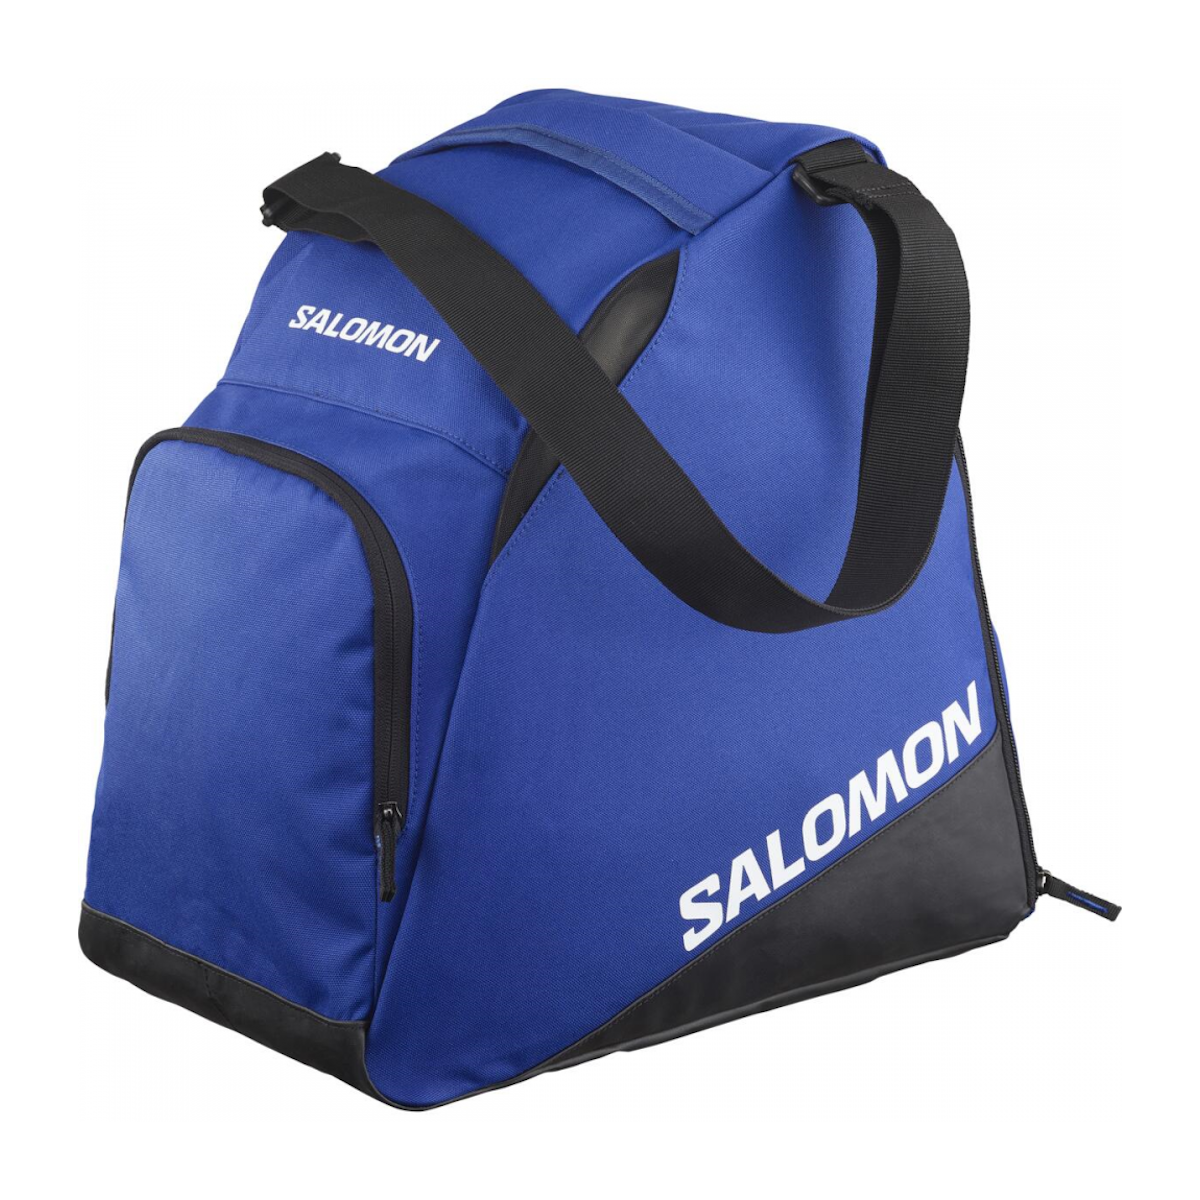 SALOMON ORIGINAL GEAR boot bag - blue/black